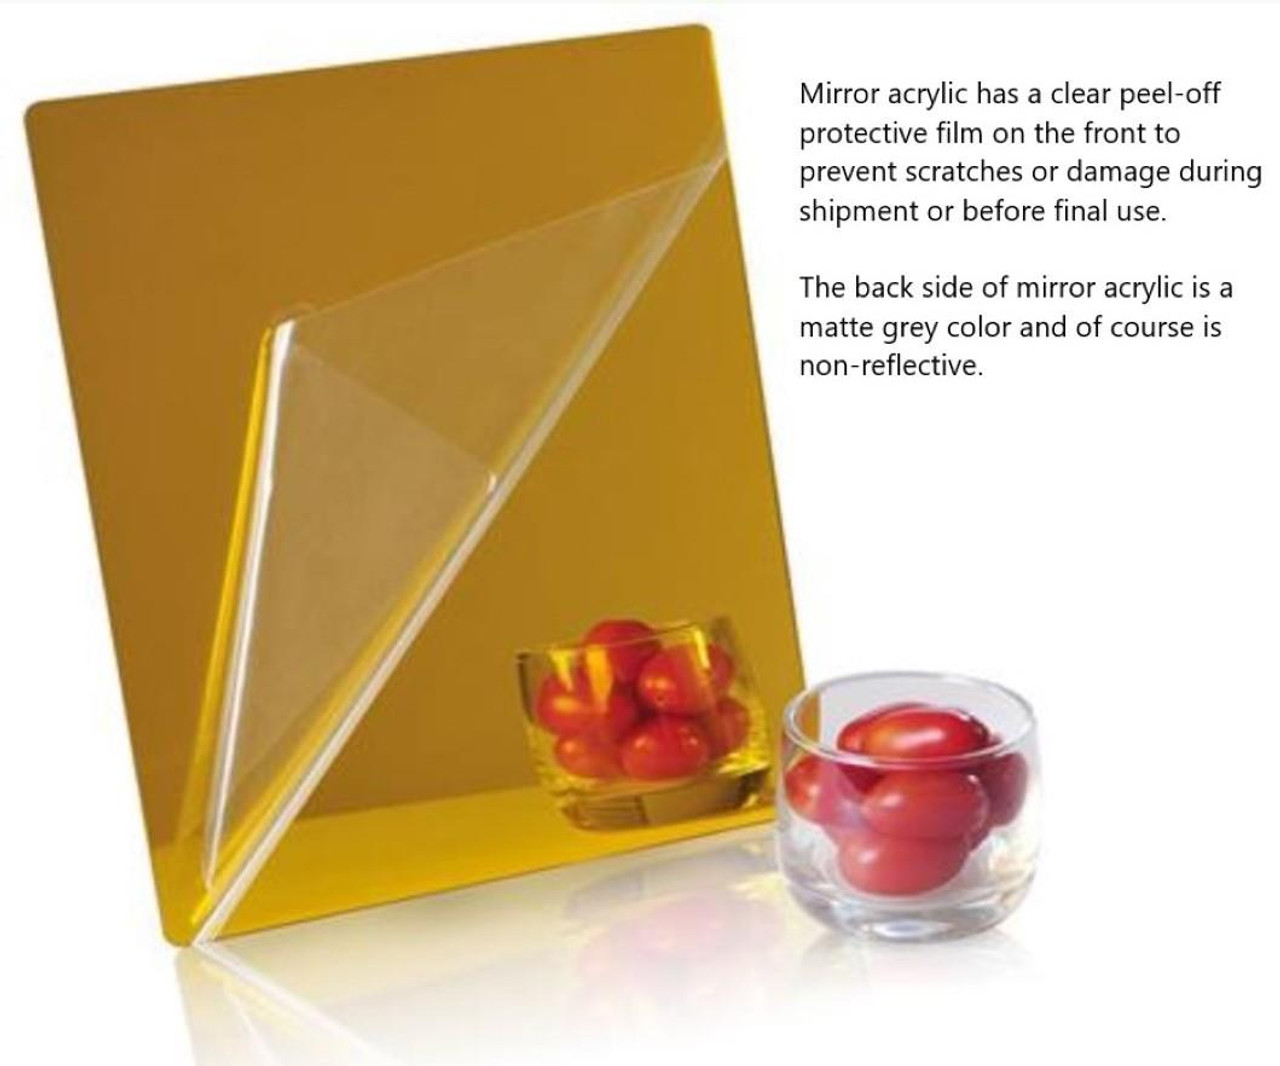 Gold Mirror Acrylic Sheet: Delvie's Plastics Inc.